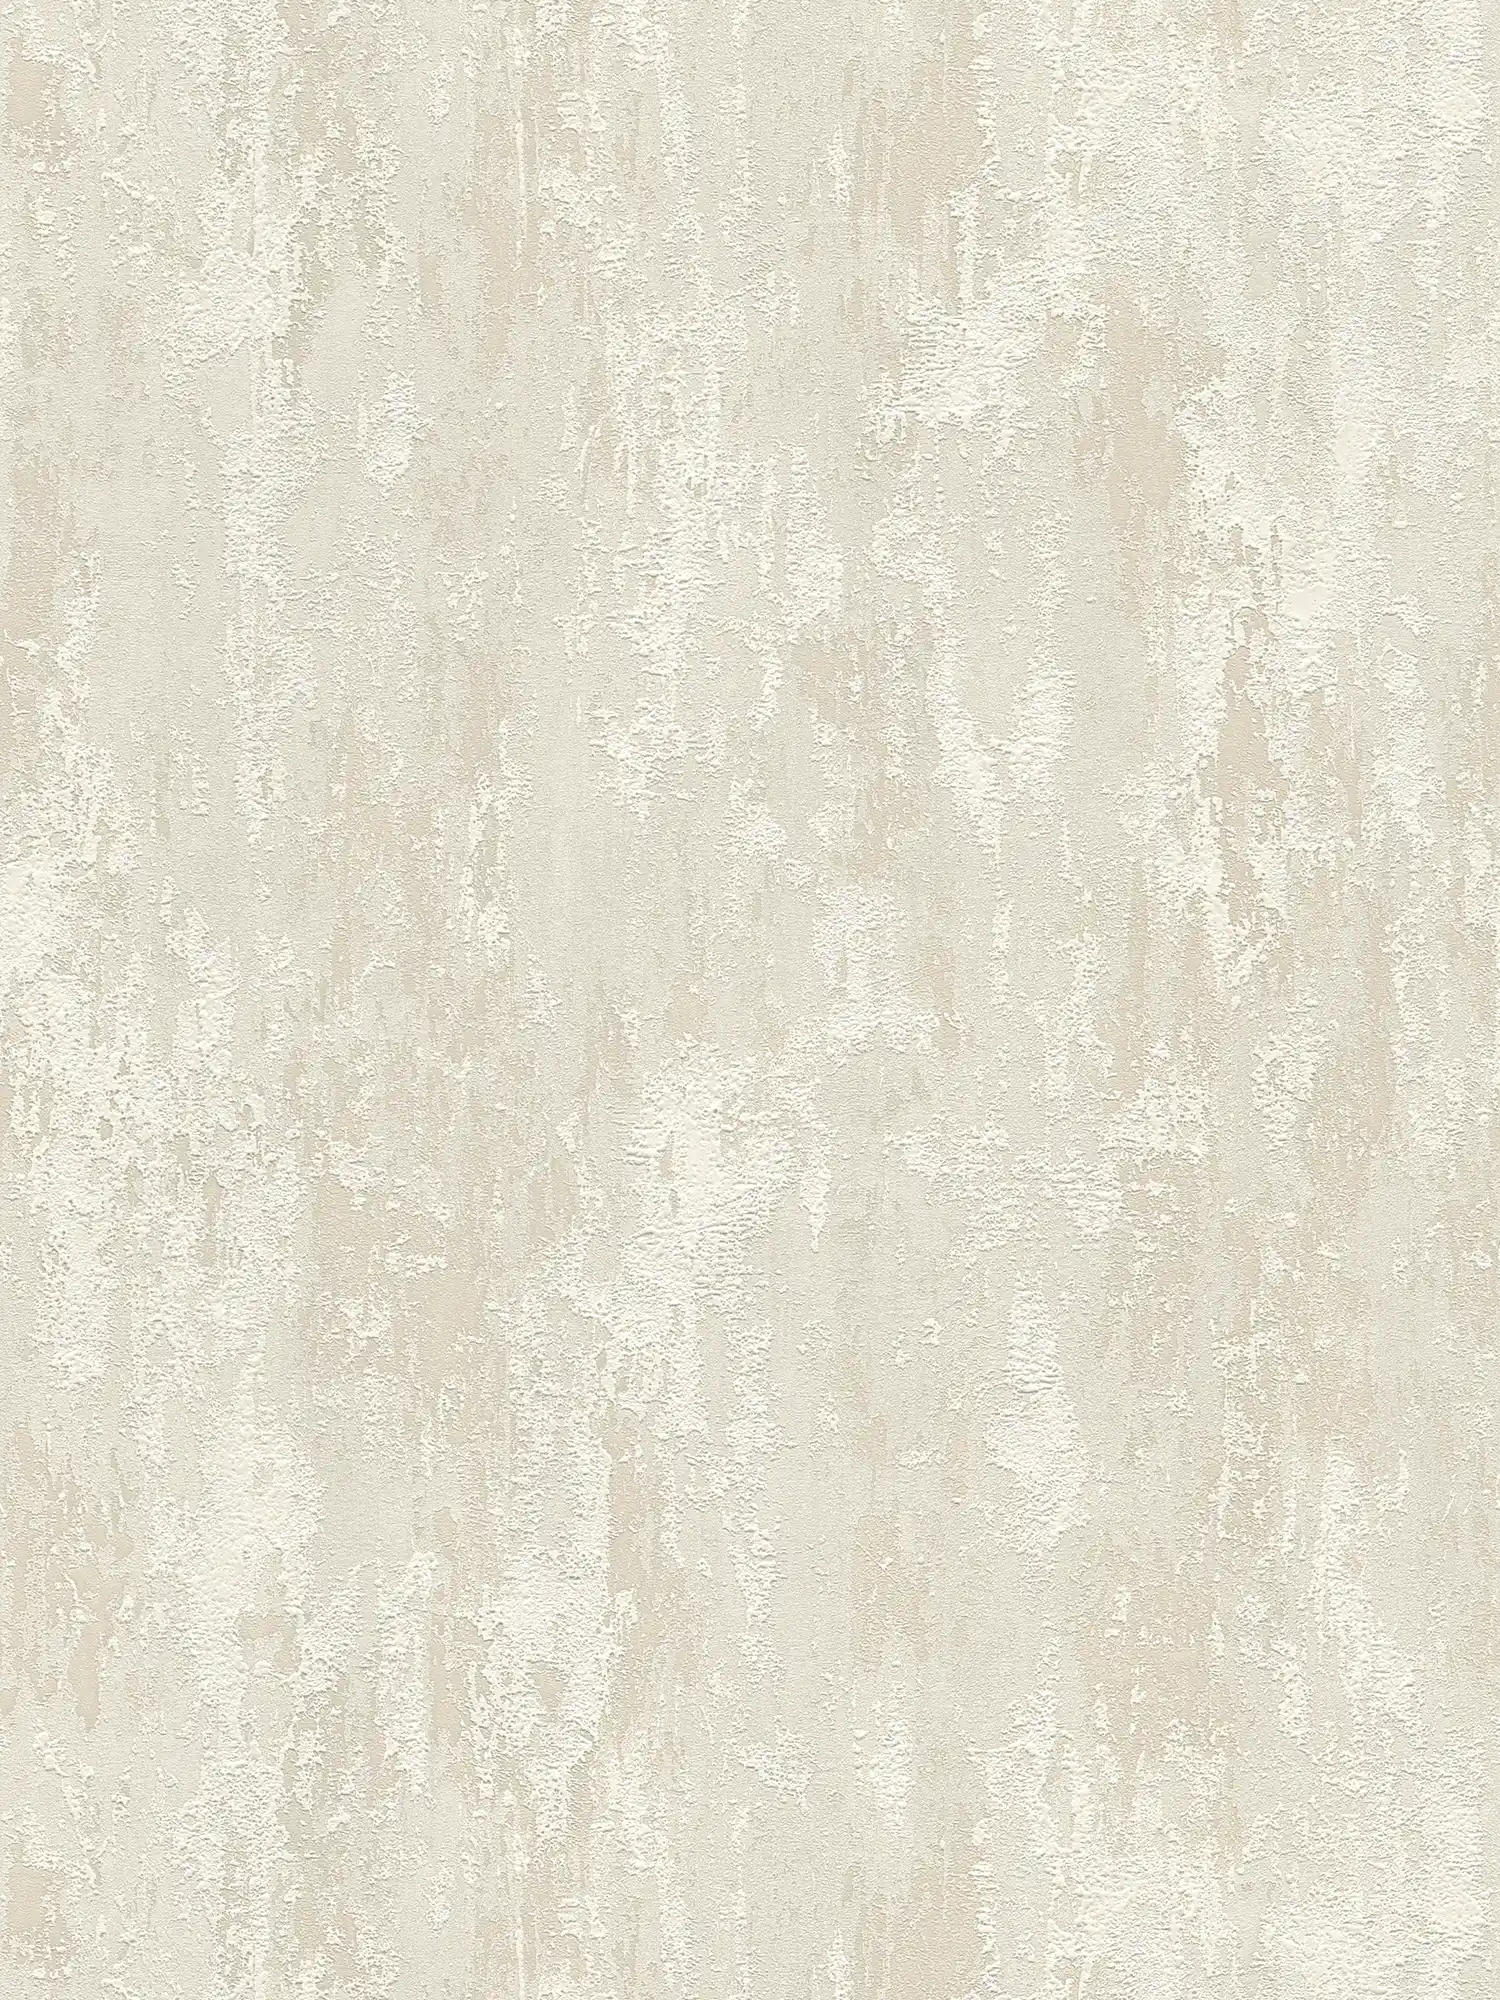 Papel pintado de textura rústica con aspecto de yeso - beige, crema, dorado
